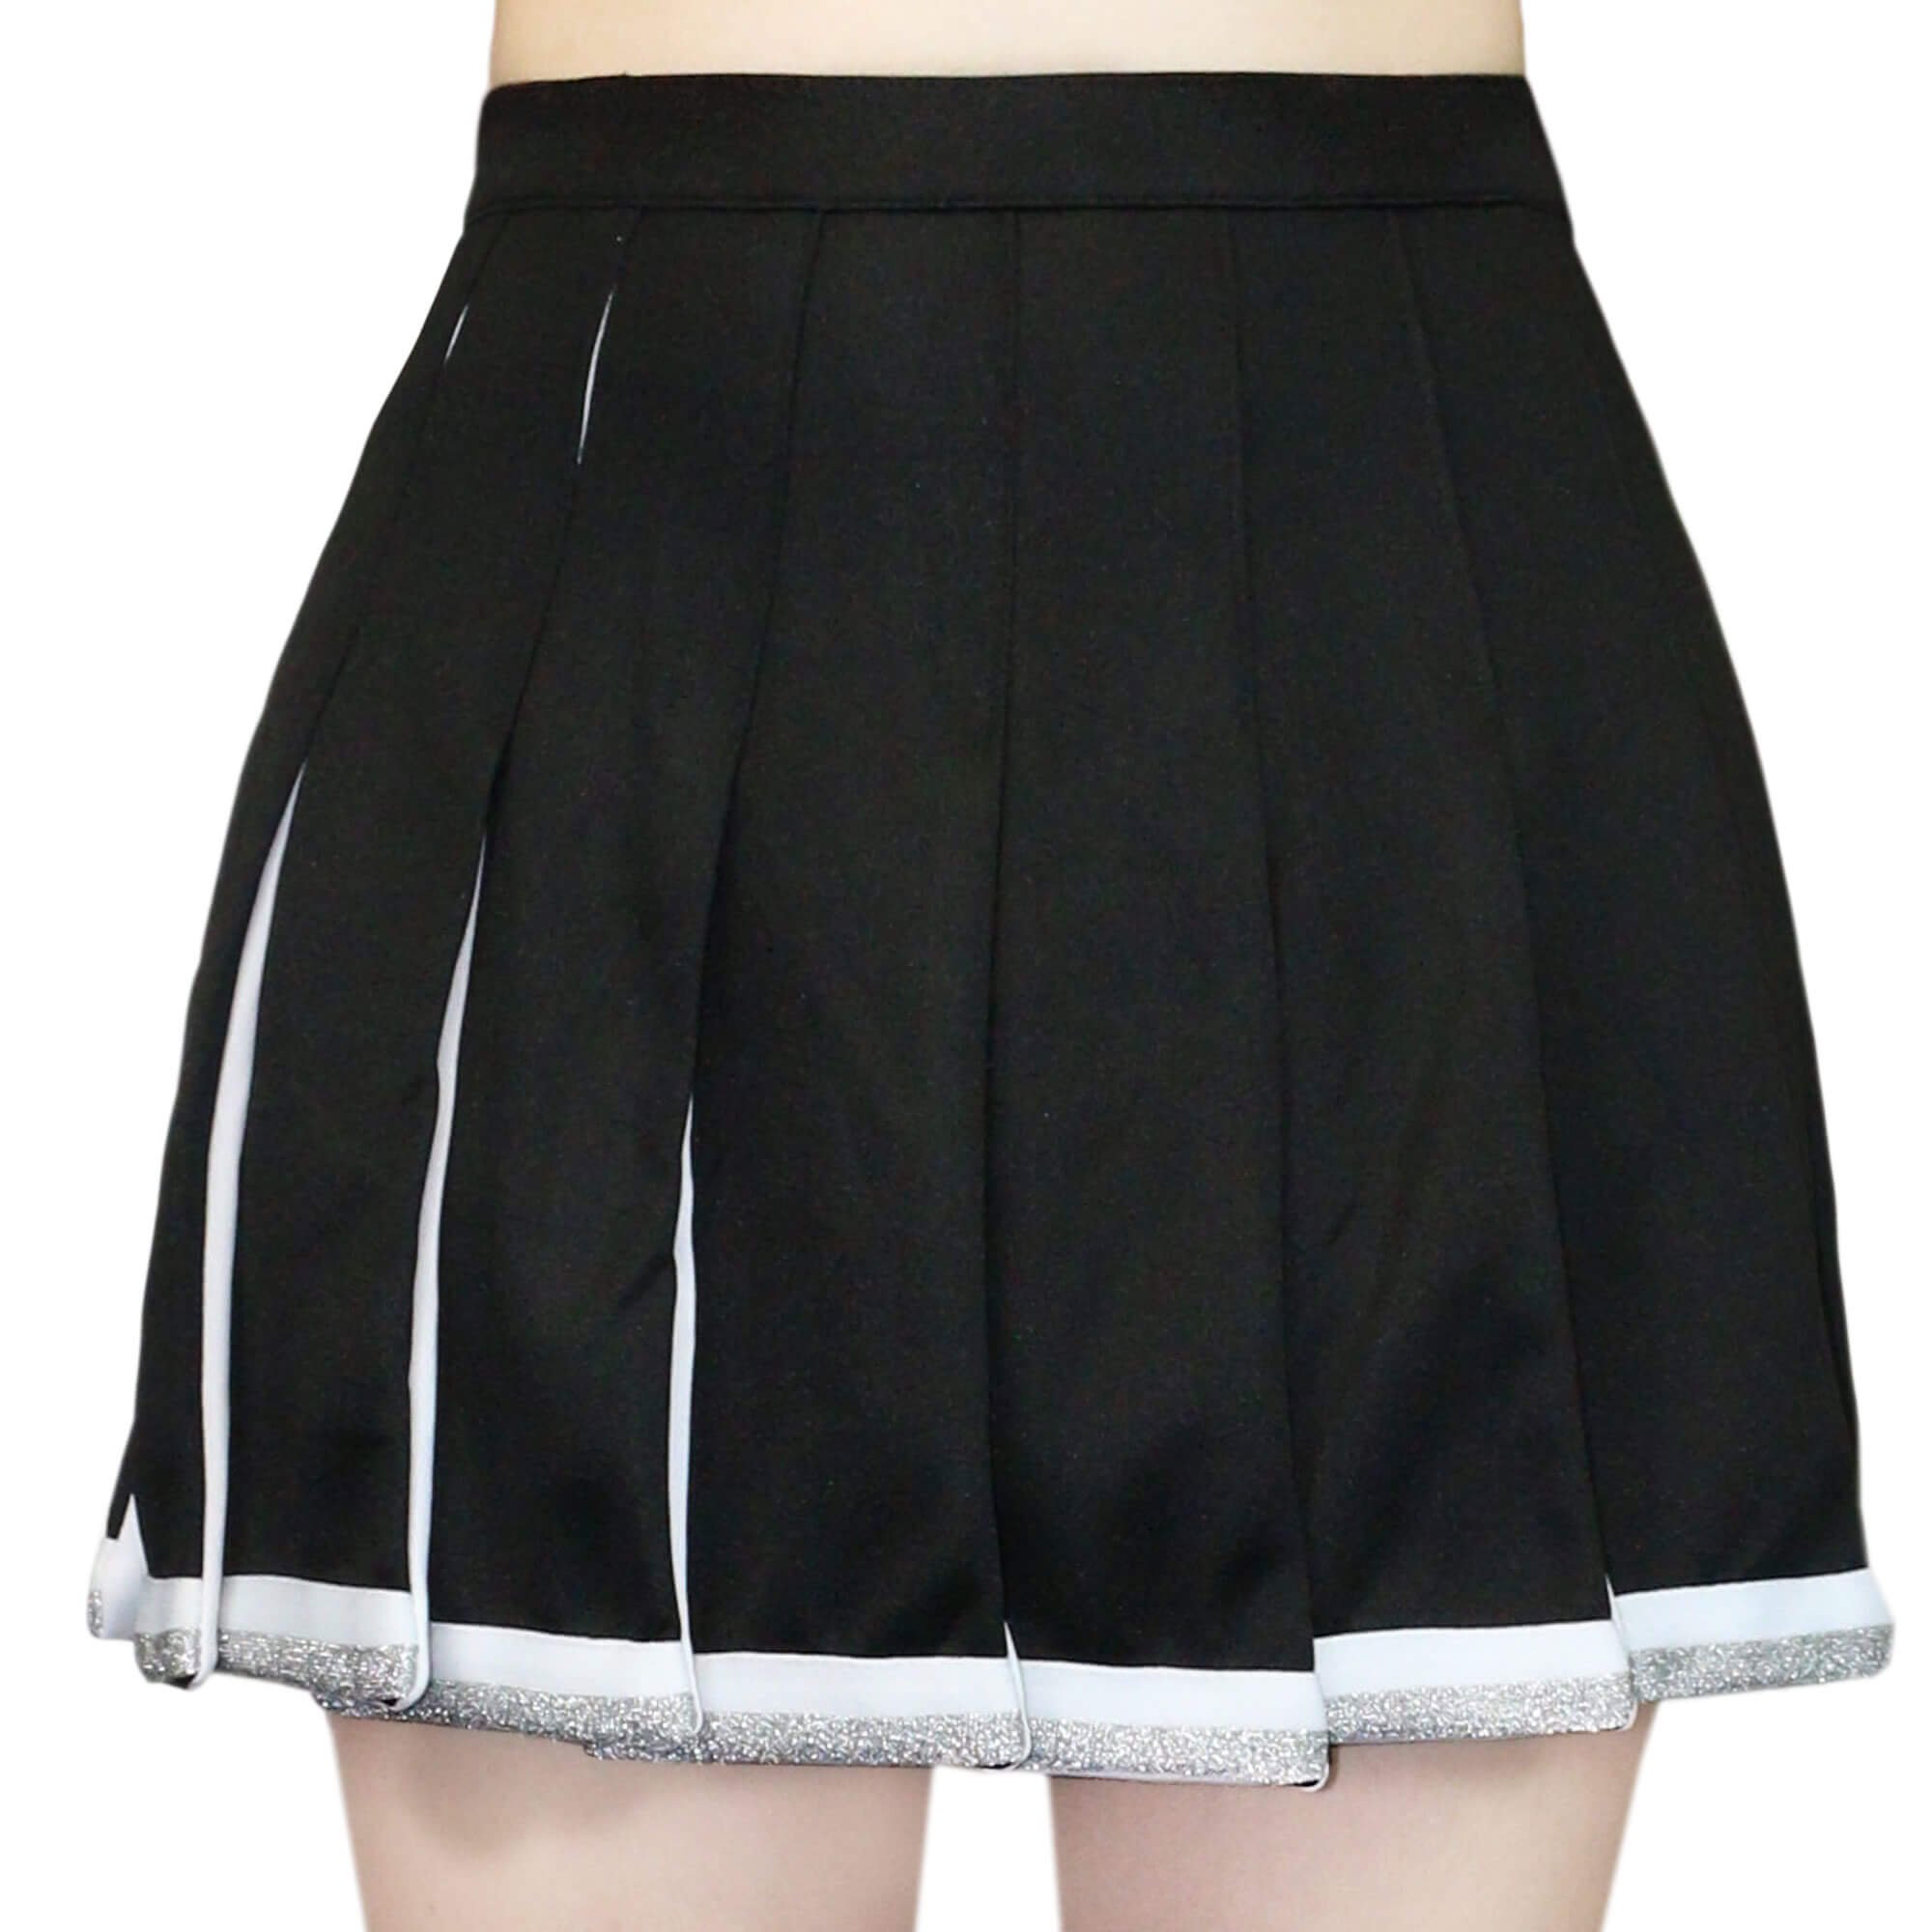 Seazoon Pleated Skirt, Black with White Stripe Cheer Skirt Mini